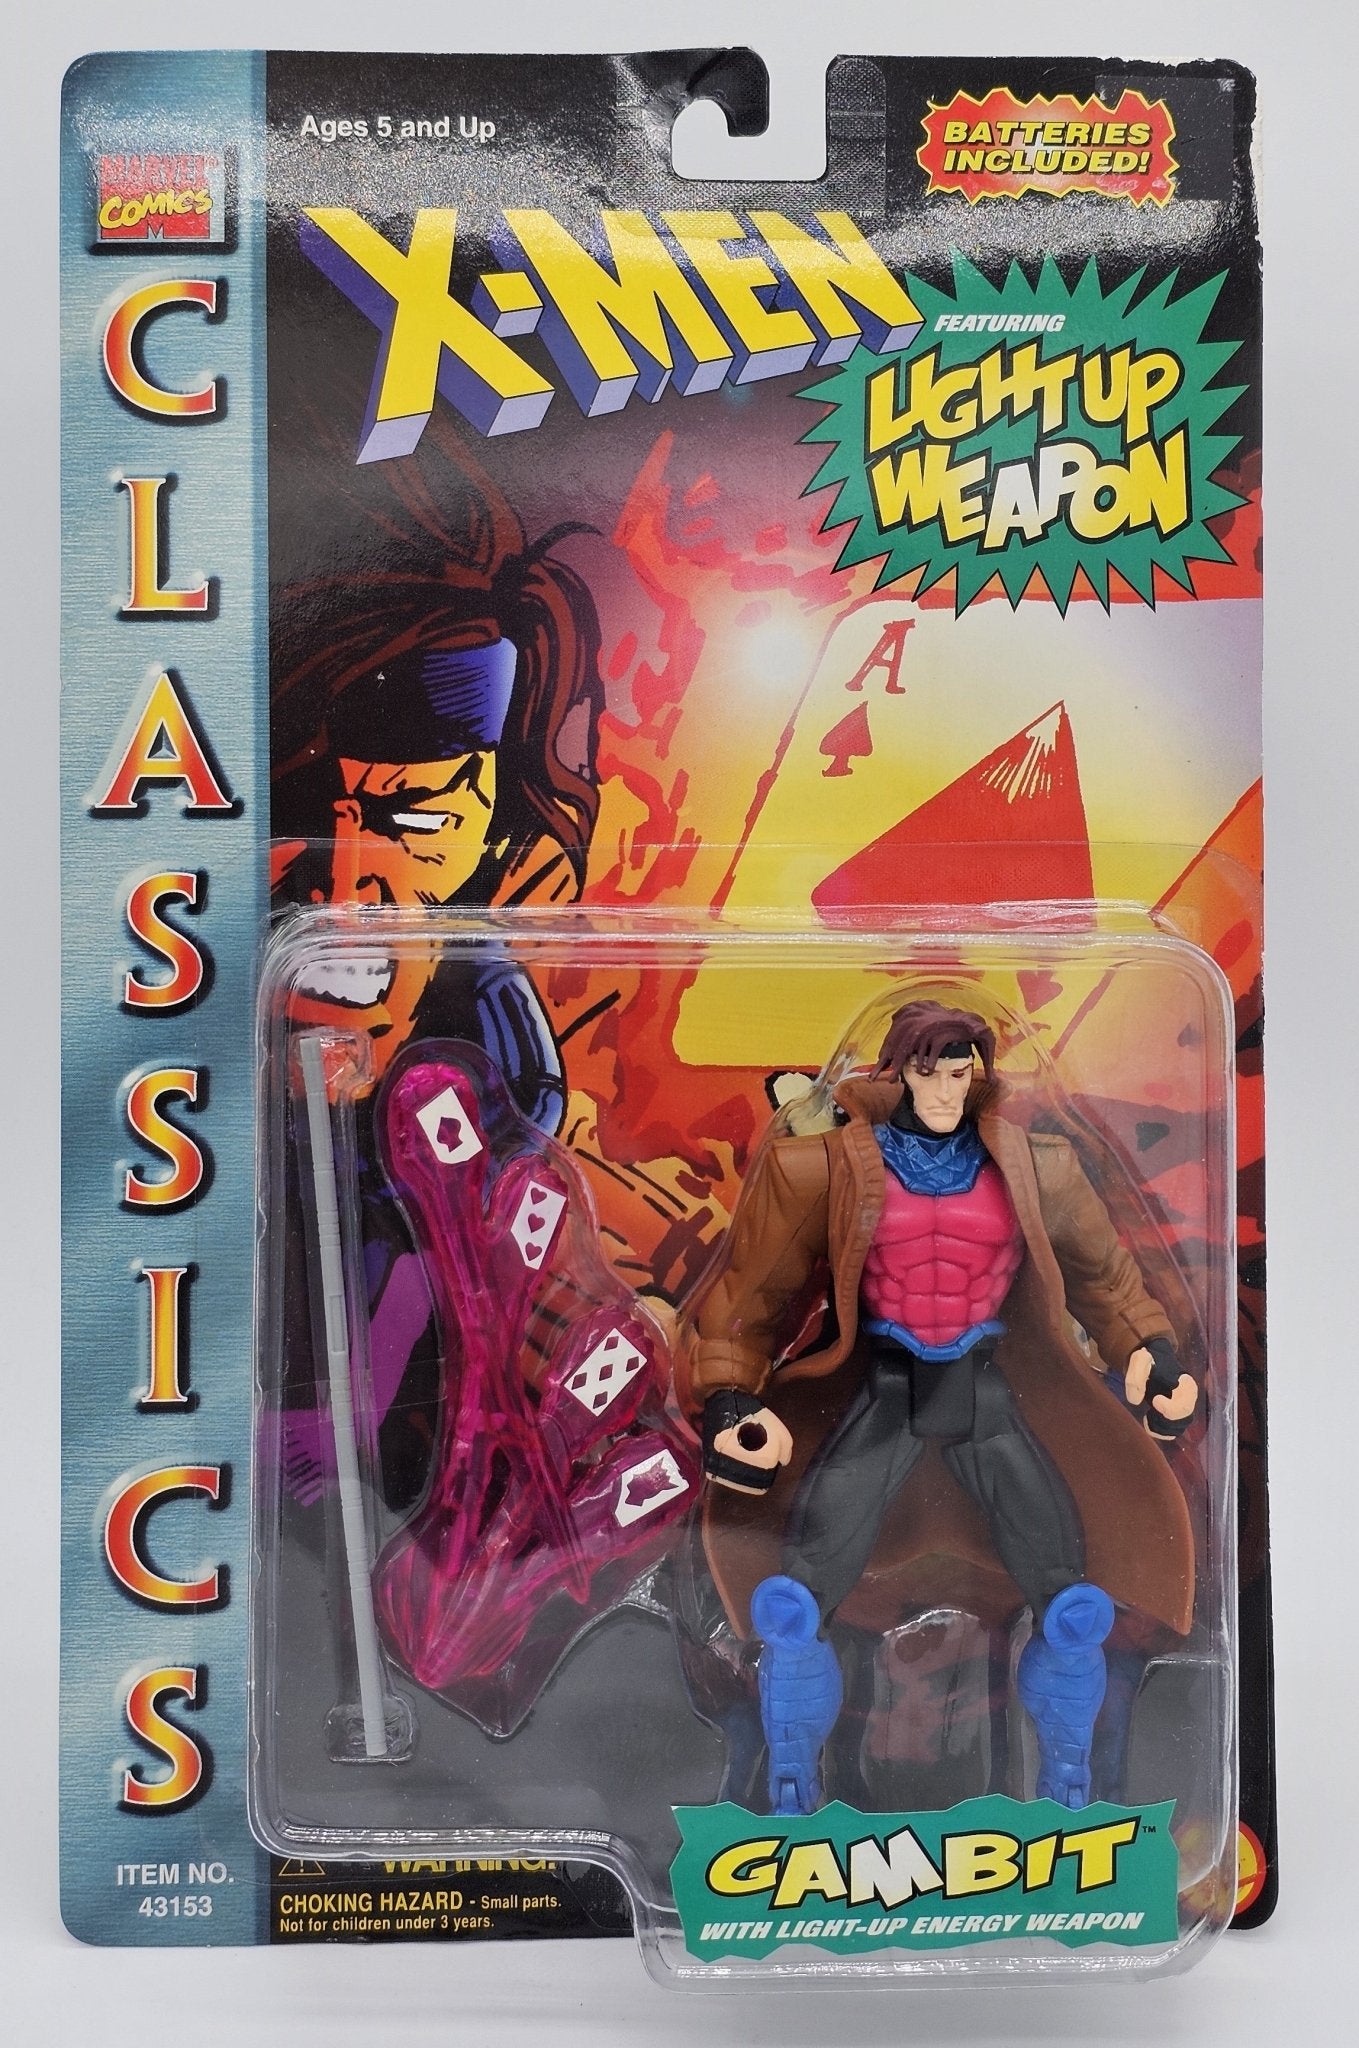 Toy Biz - Toy Biz | X-Men Gambit 1996 | Marval Comics Classics | Vintage Marvel Action Figure - Action Figures - Steady Bunny Shop